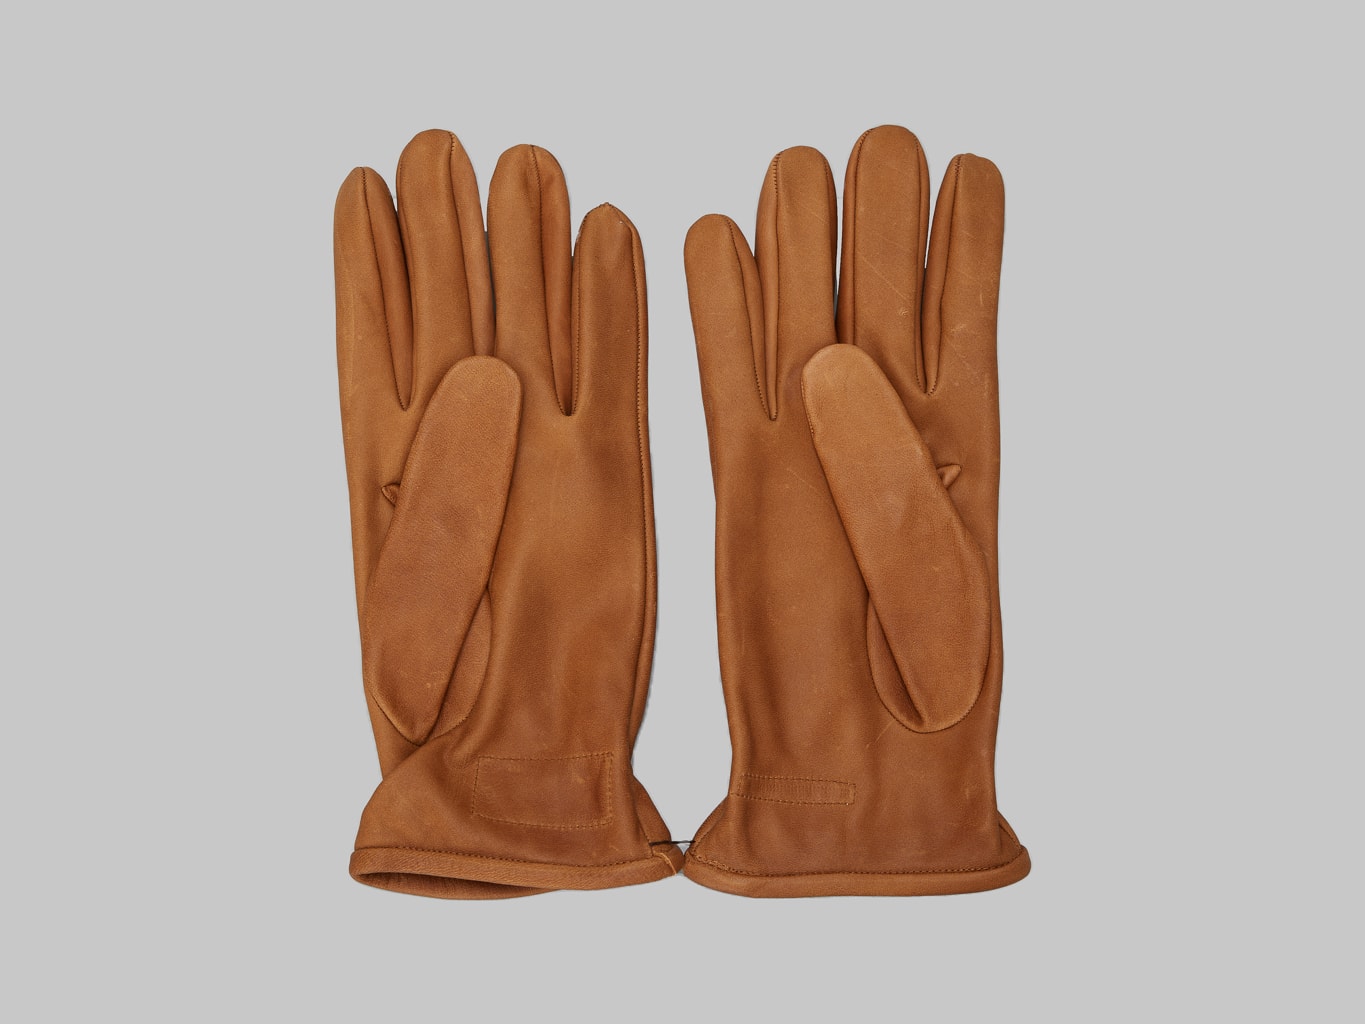 Shangri-La Heritage "Bandit" Nubuck Horsehide Gloves